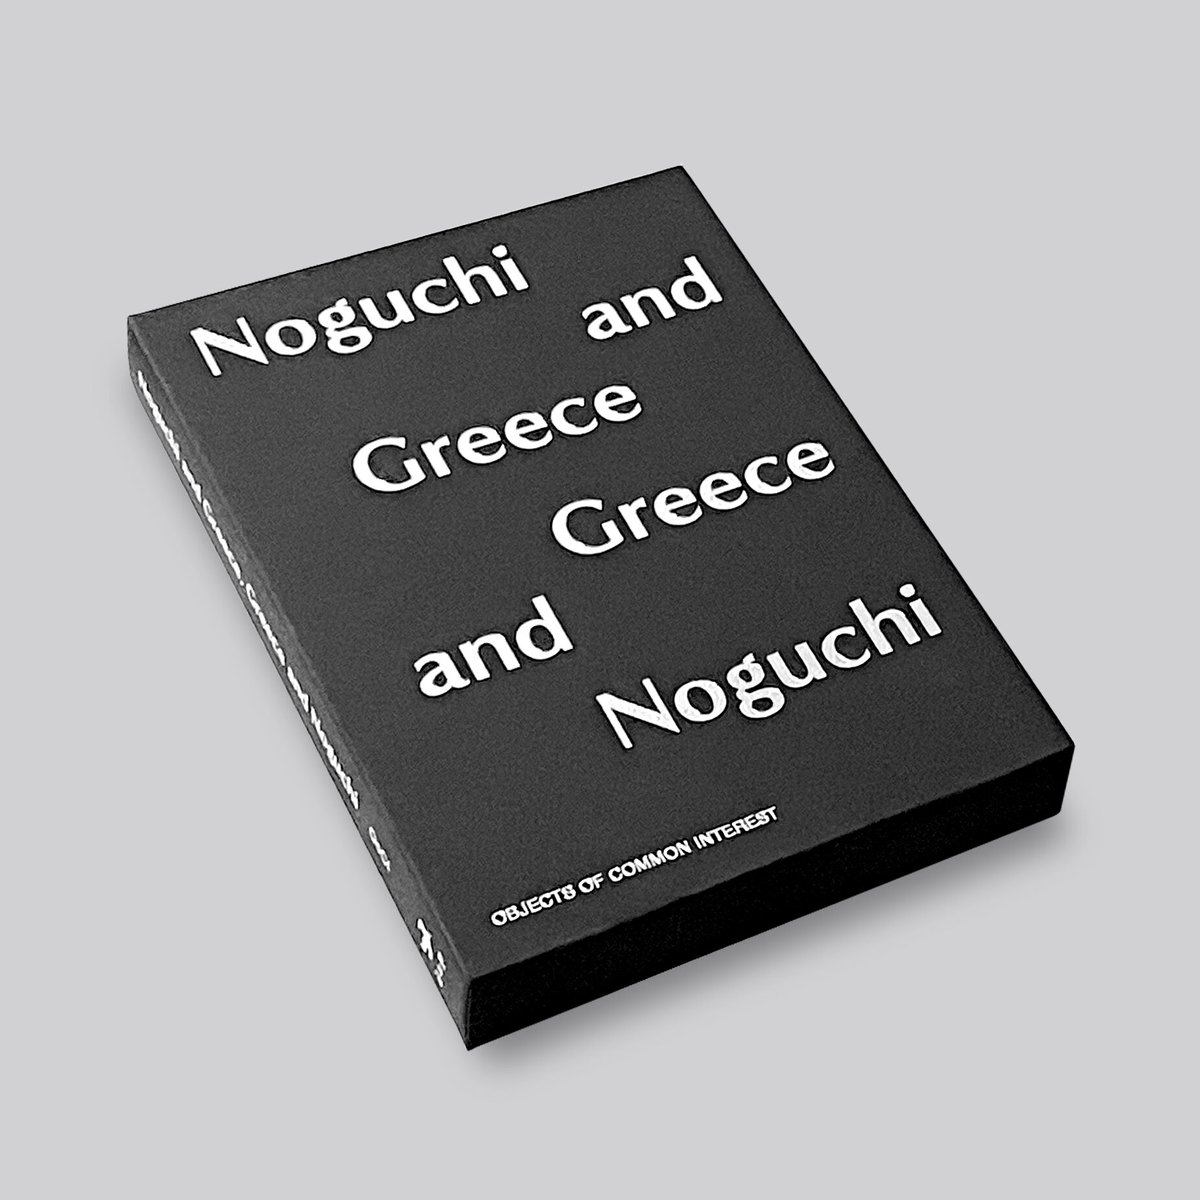 Noguchi and Greece, Greece and Noguchi: Objects...